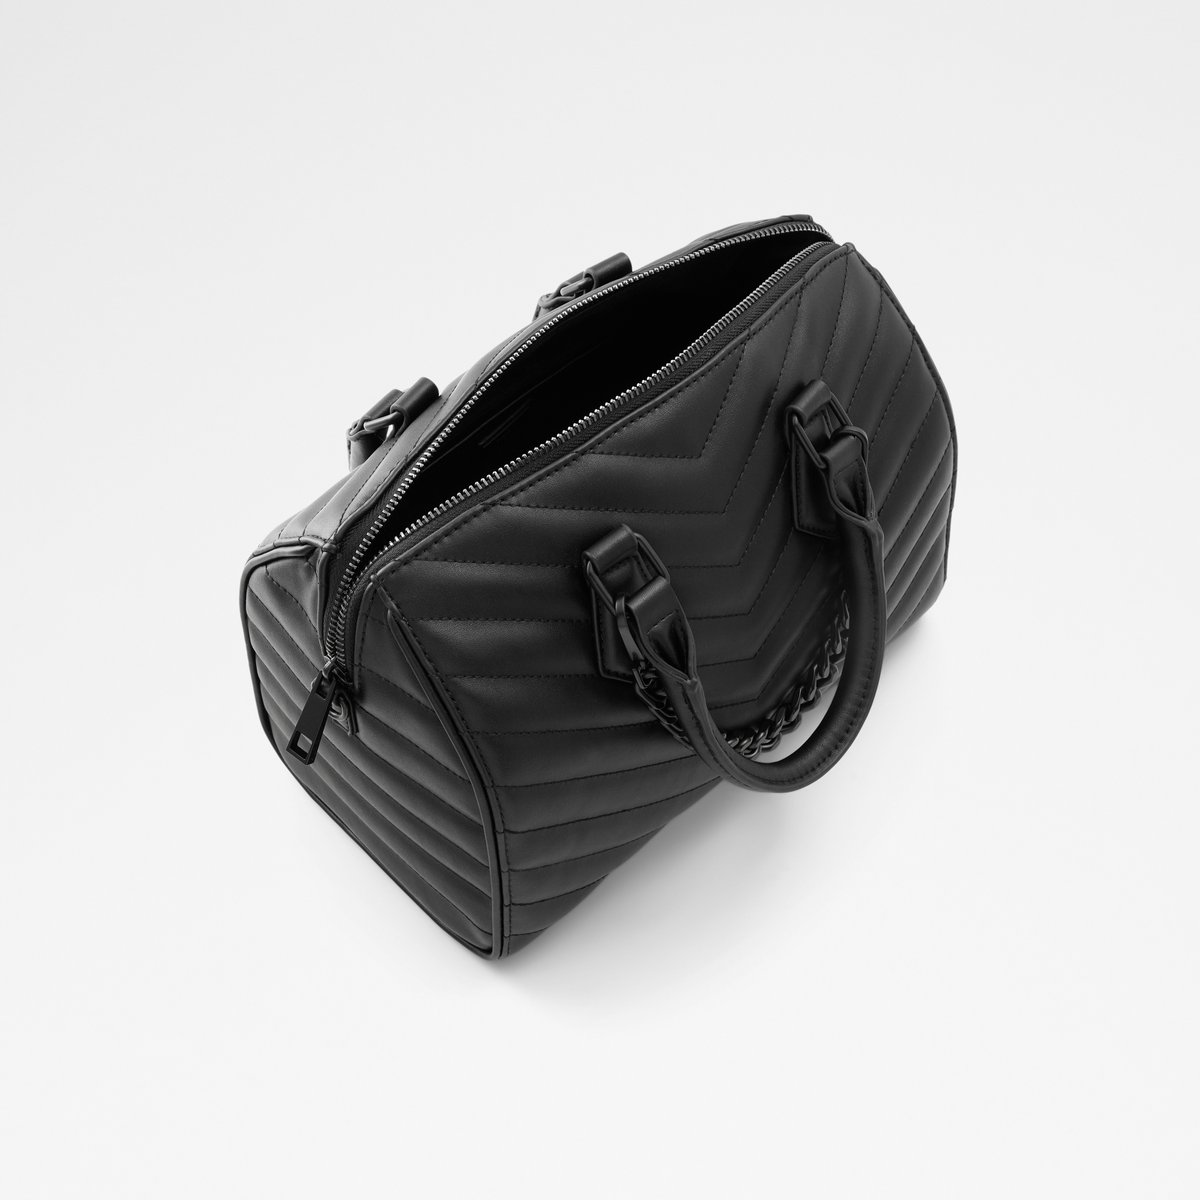 Kedauldan Black Women's Top Handle Bags | ALDO US